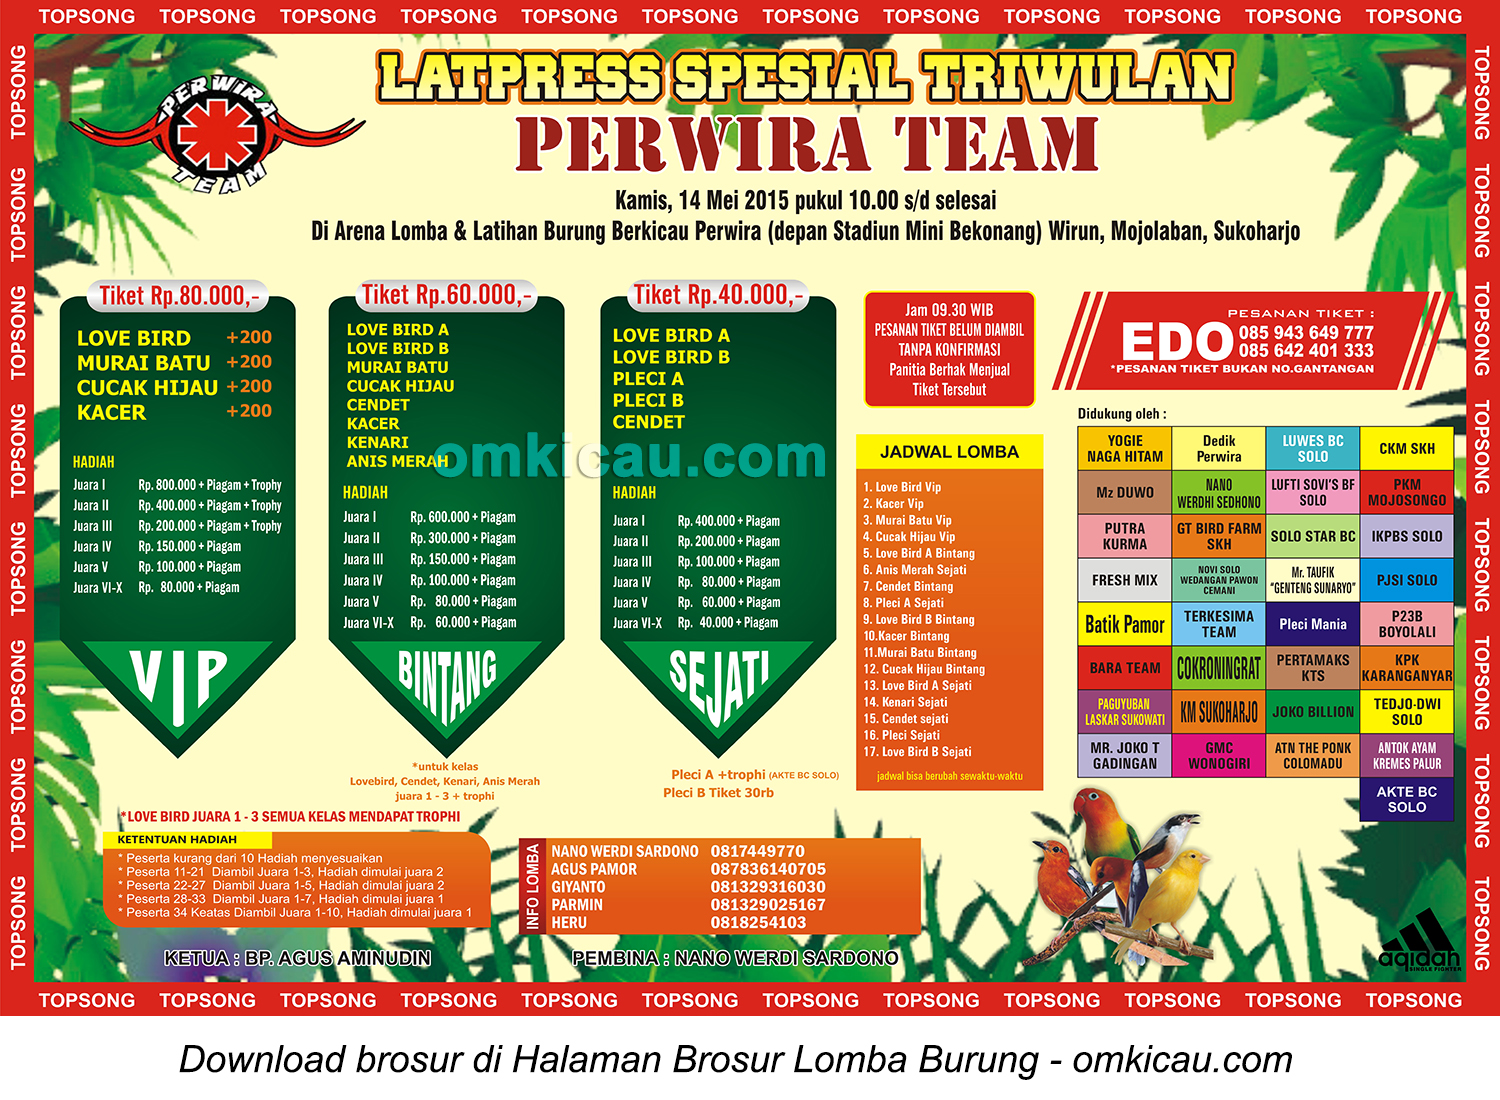 Brosur Latpres Spesial Triwulan Perwira Team, Sukoharjo, 14 Mei 2015